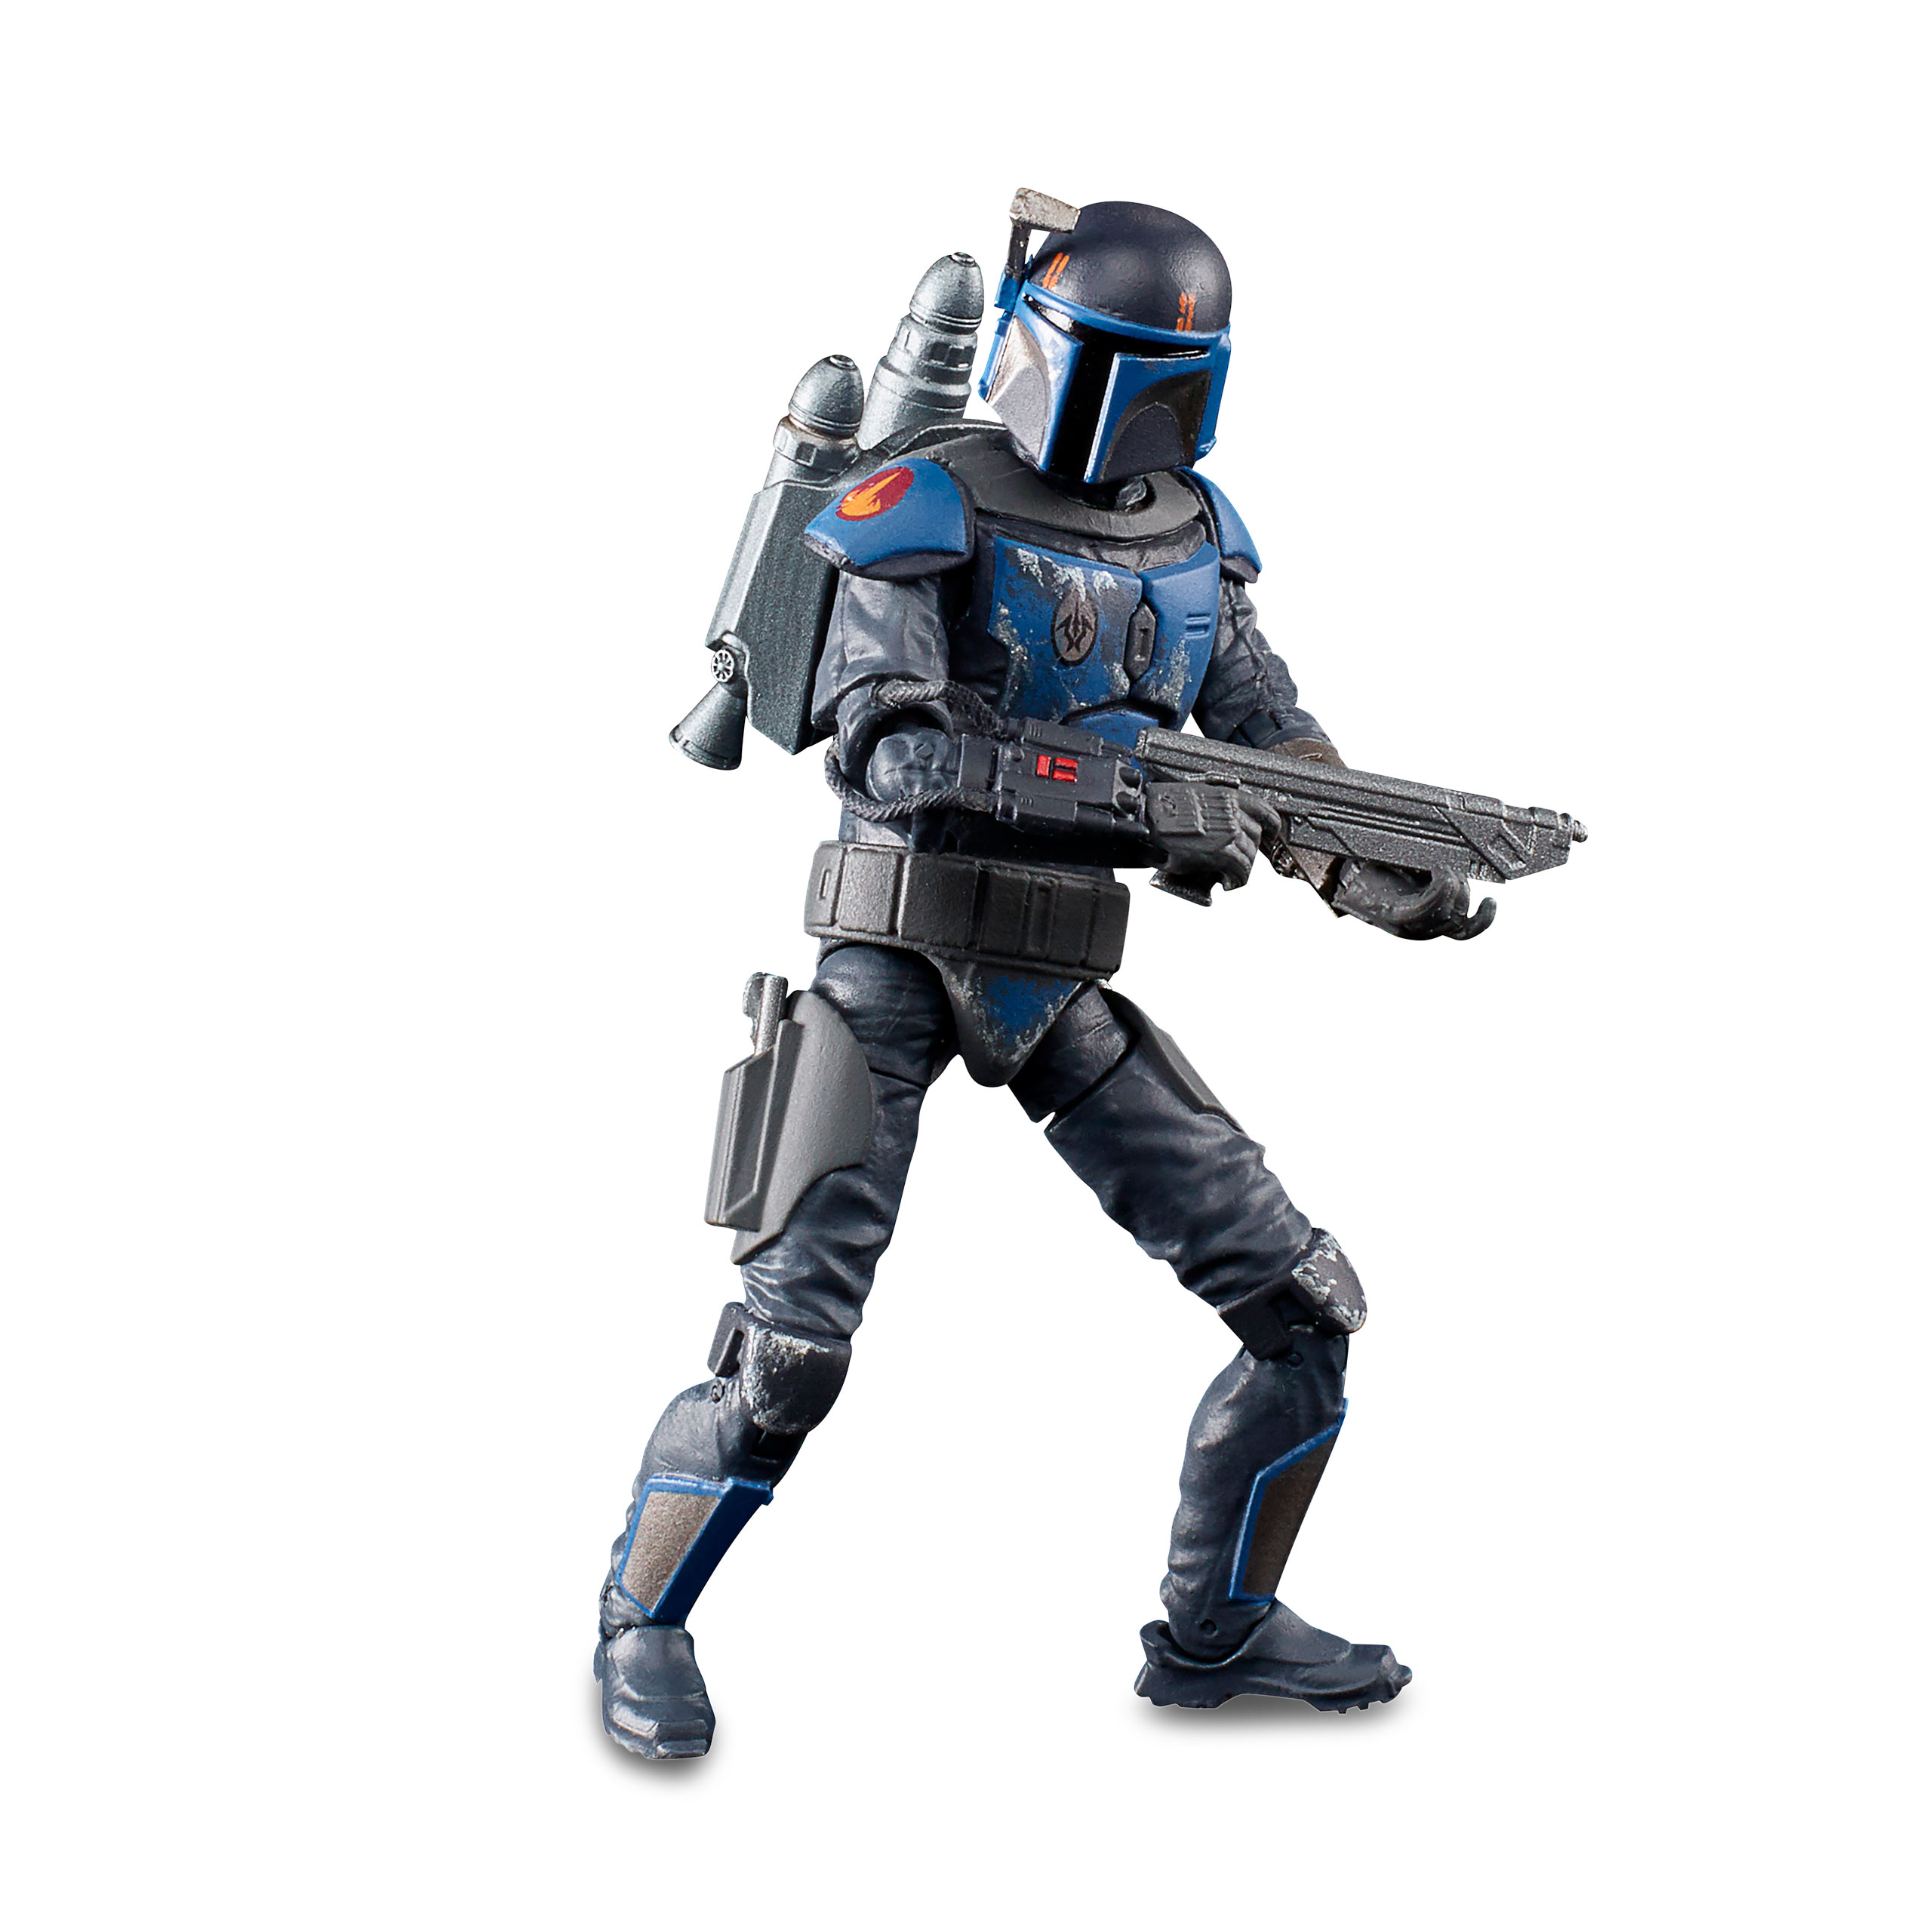 Mandalorian Death Watch Airborne Trooper Action Figure - Star Wars The Mandalorian